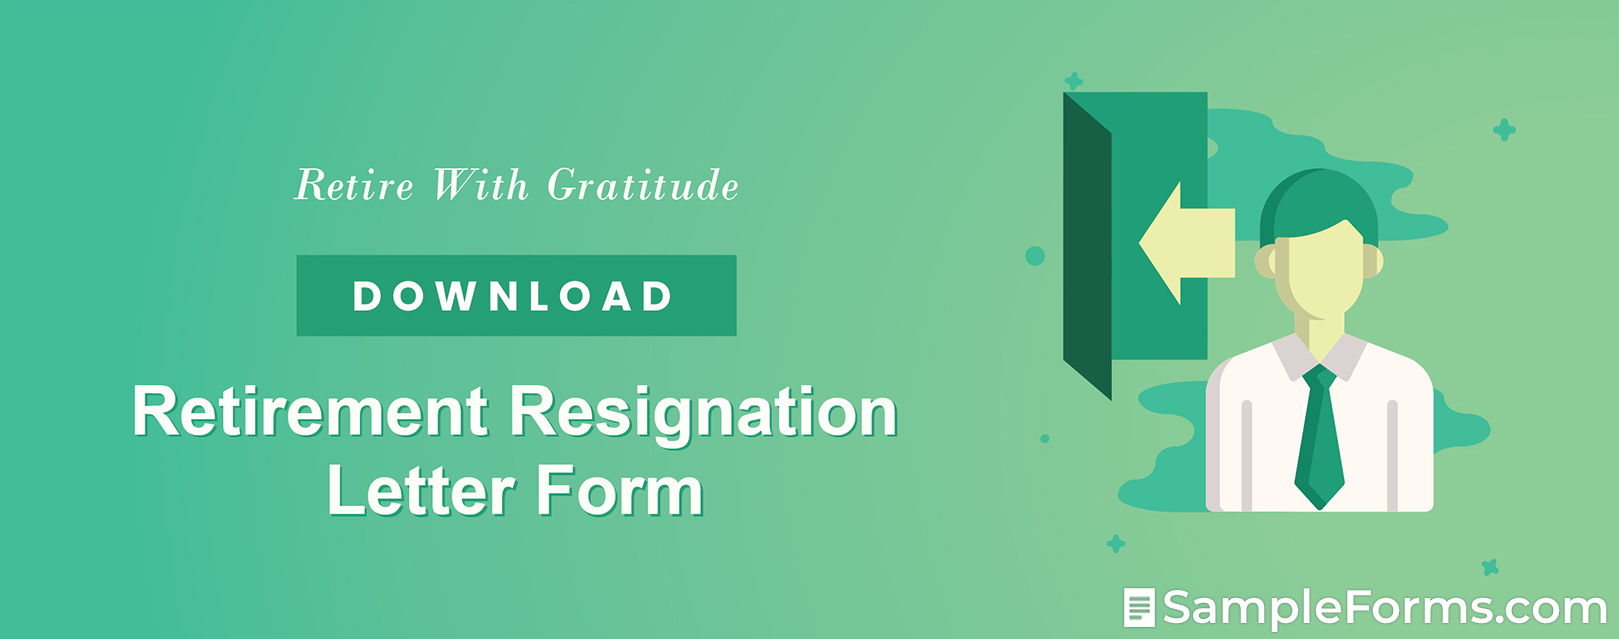 Retirement Resignation Letter Form1